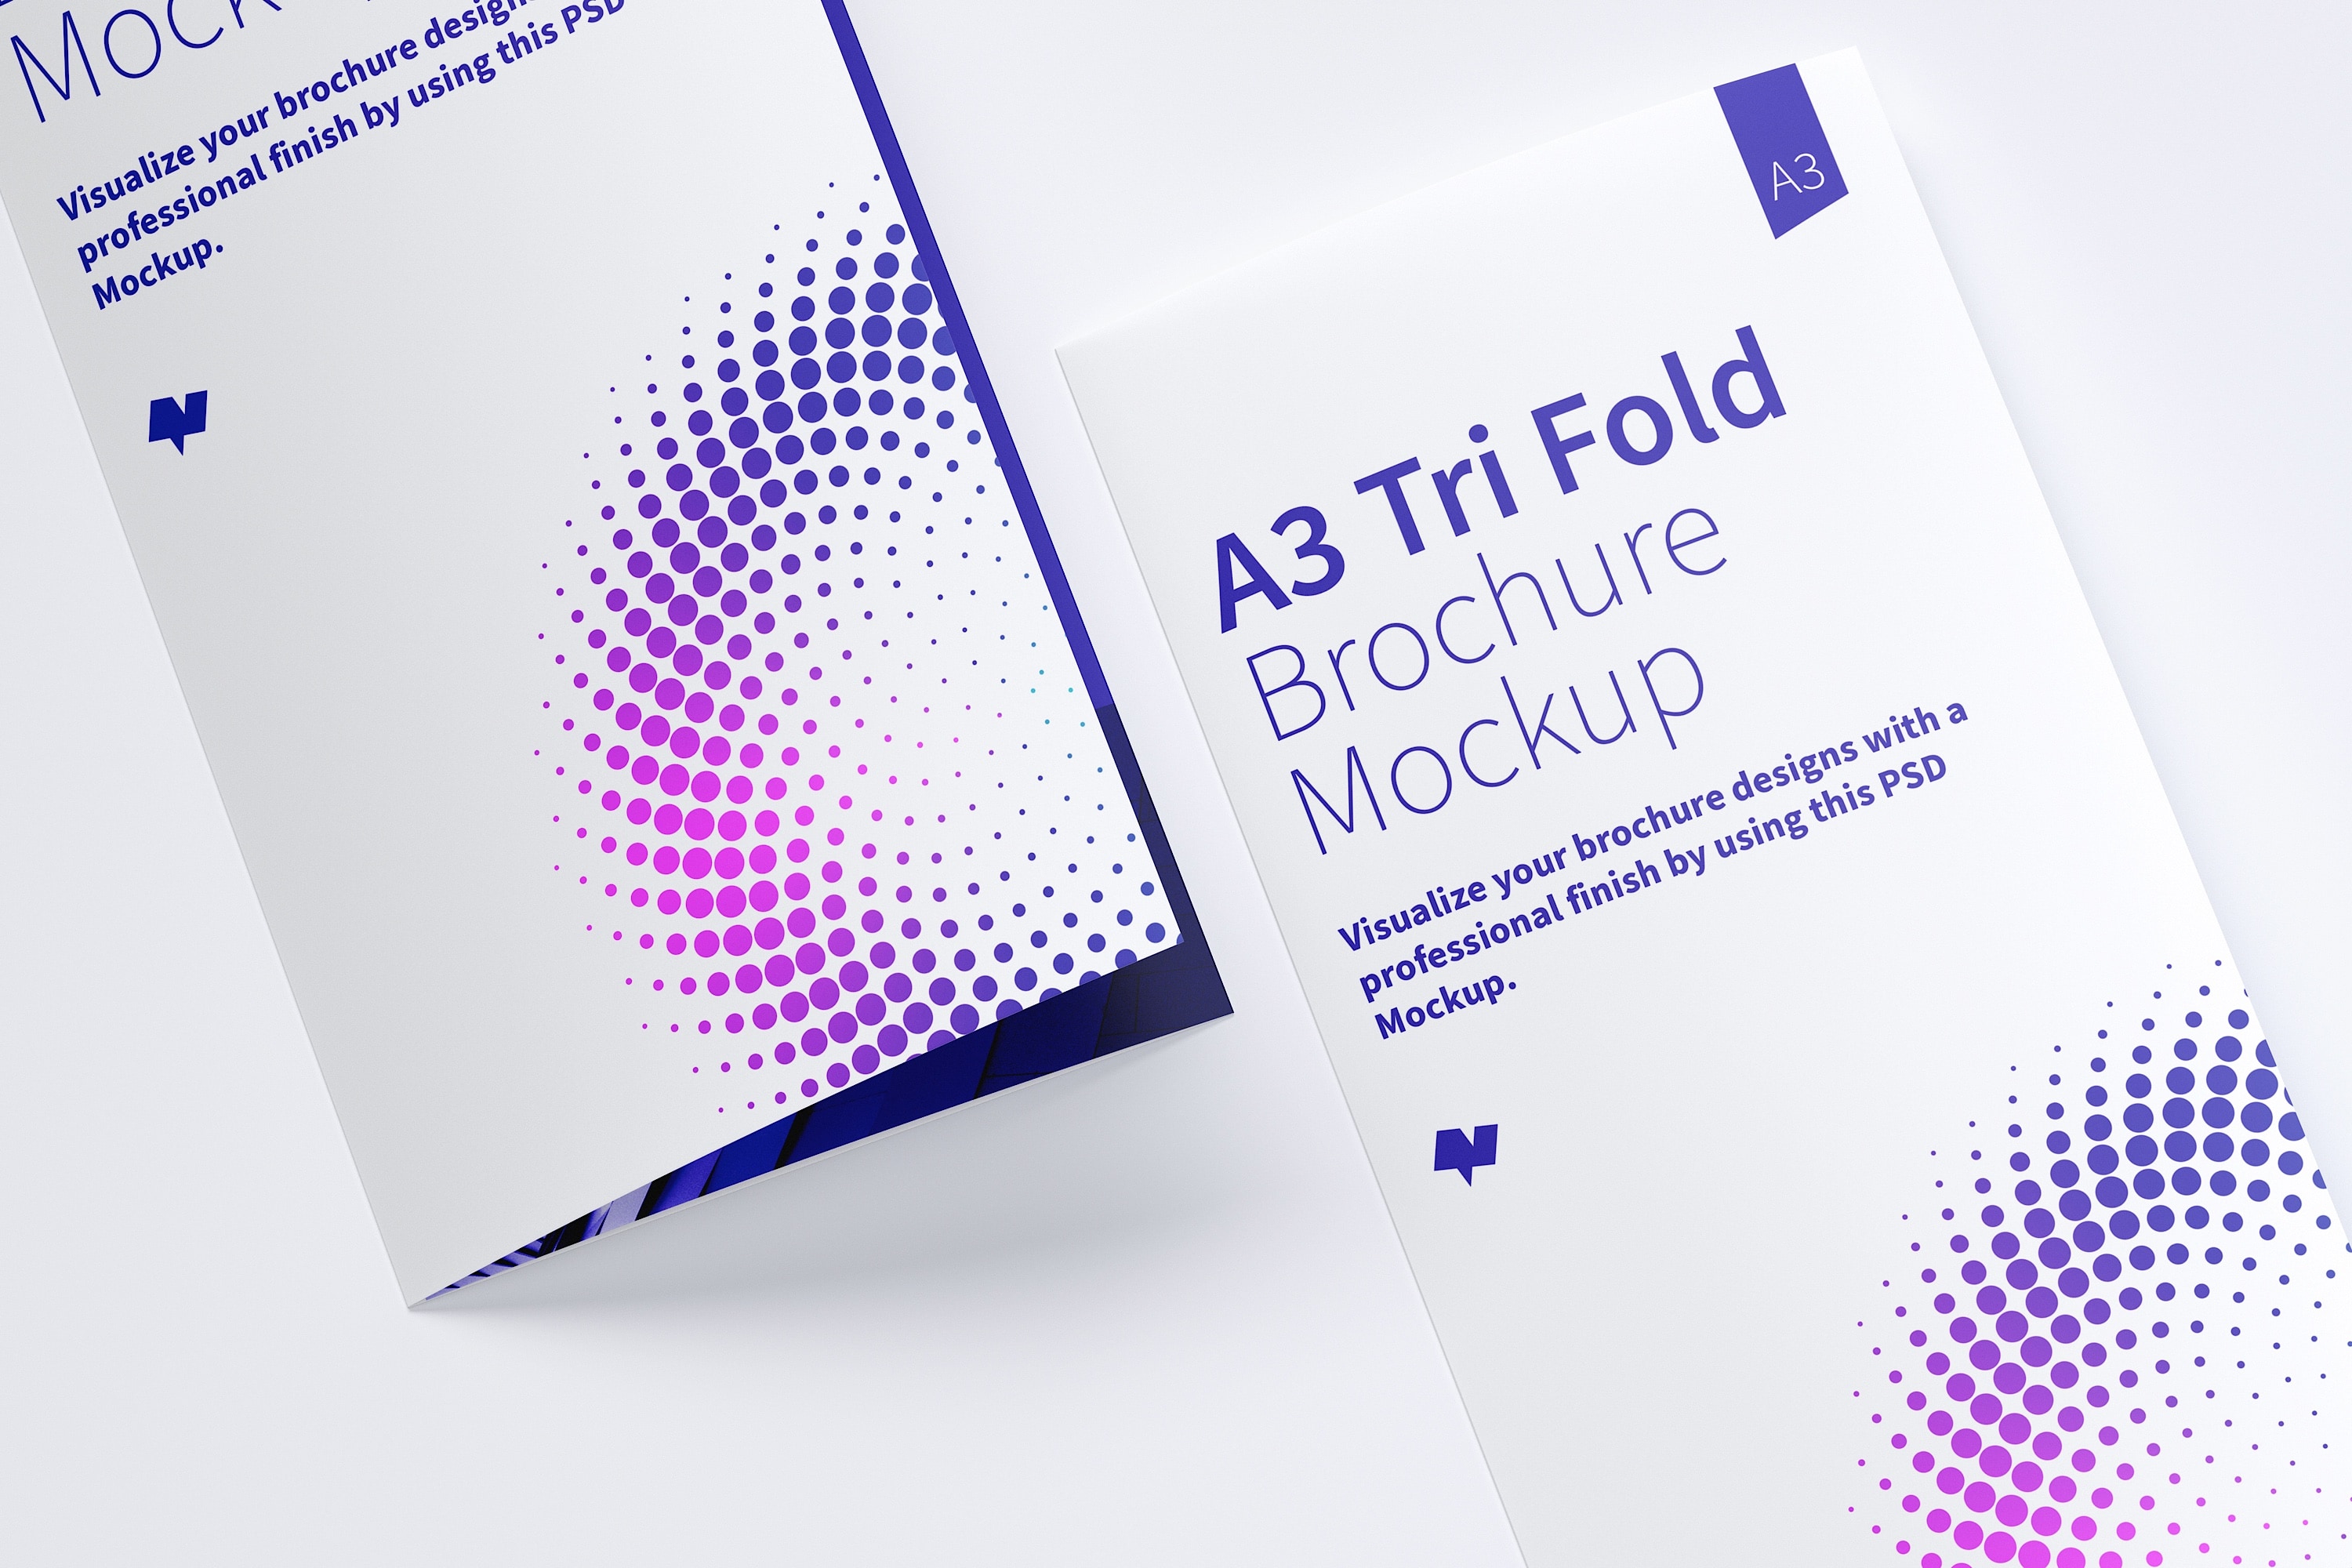 A3尺寸大小三折页传单小册子设计图预览样机05 A3 Trifold Brochure Mockup 05插图(1)